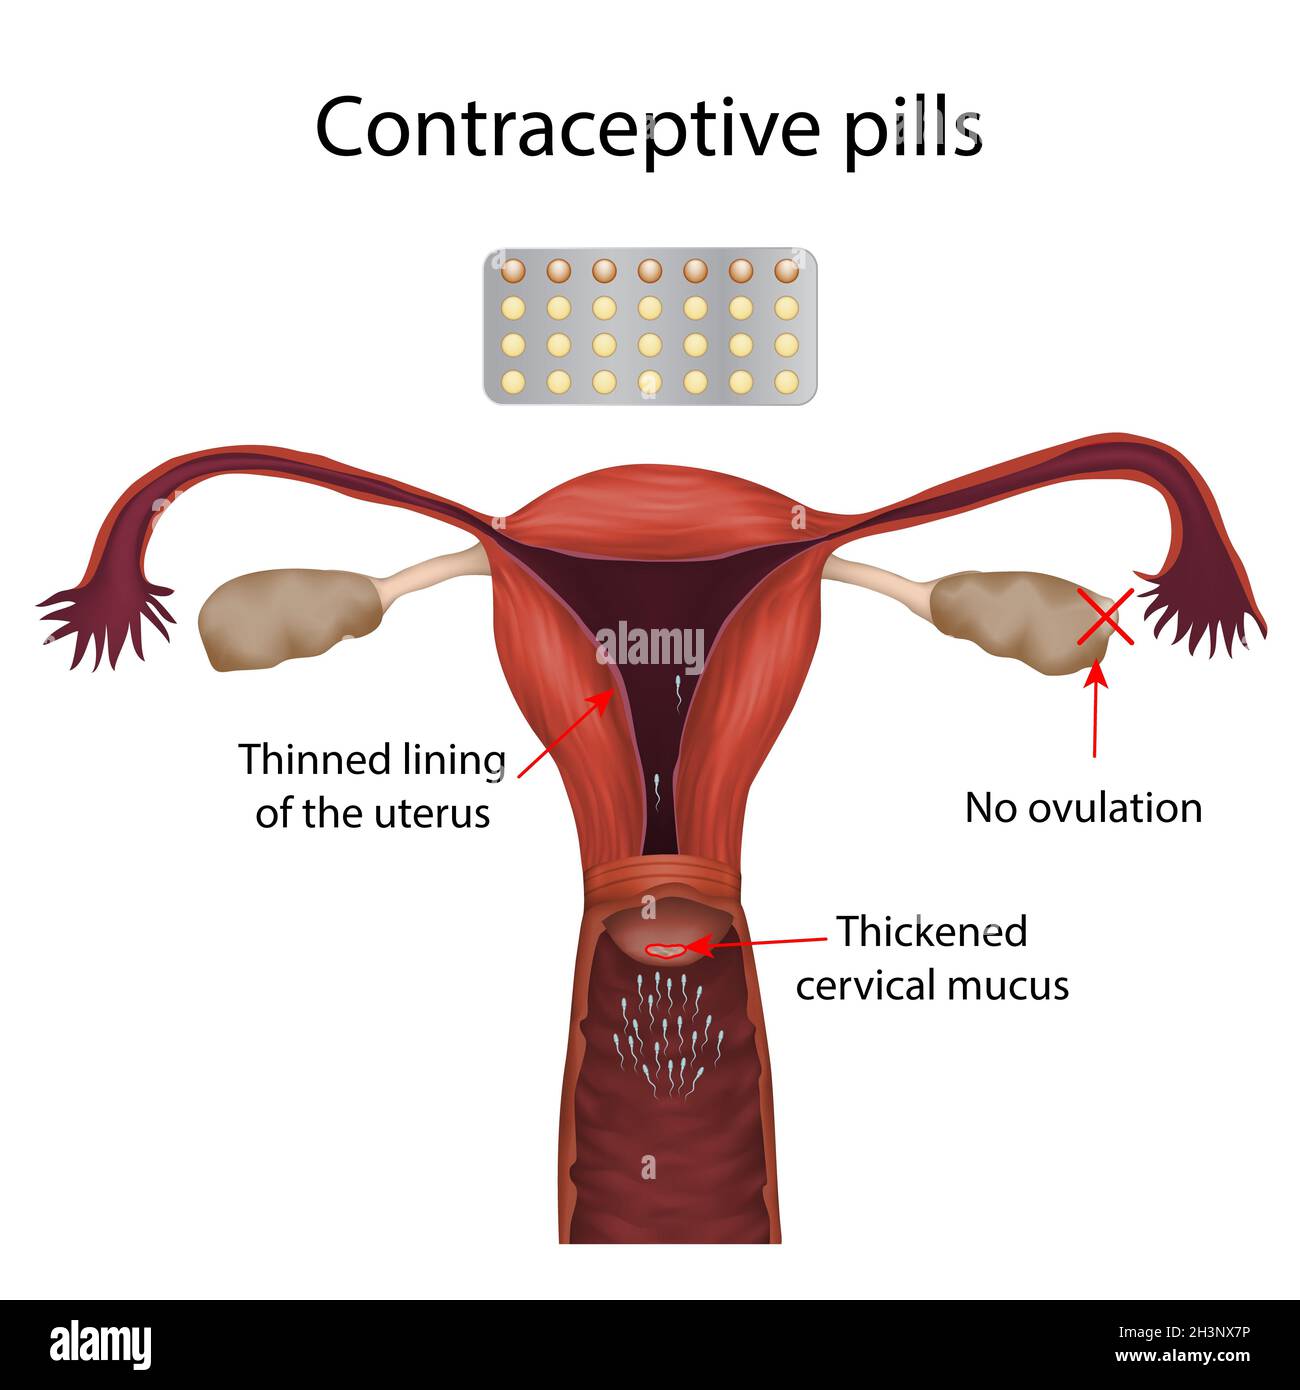 Contraceptive pills, illustration Stock Photo